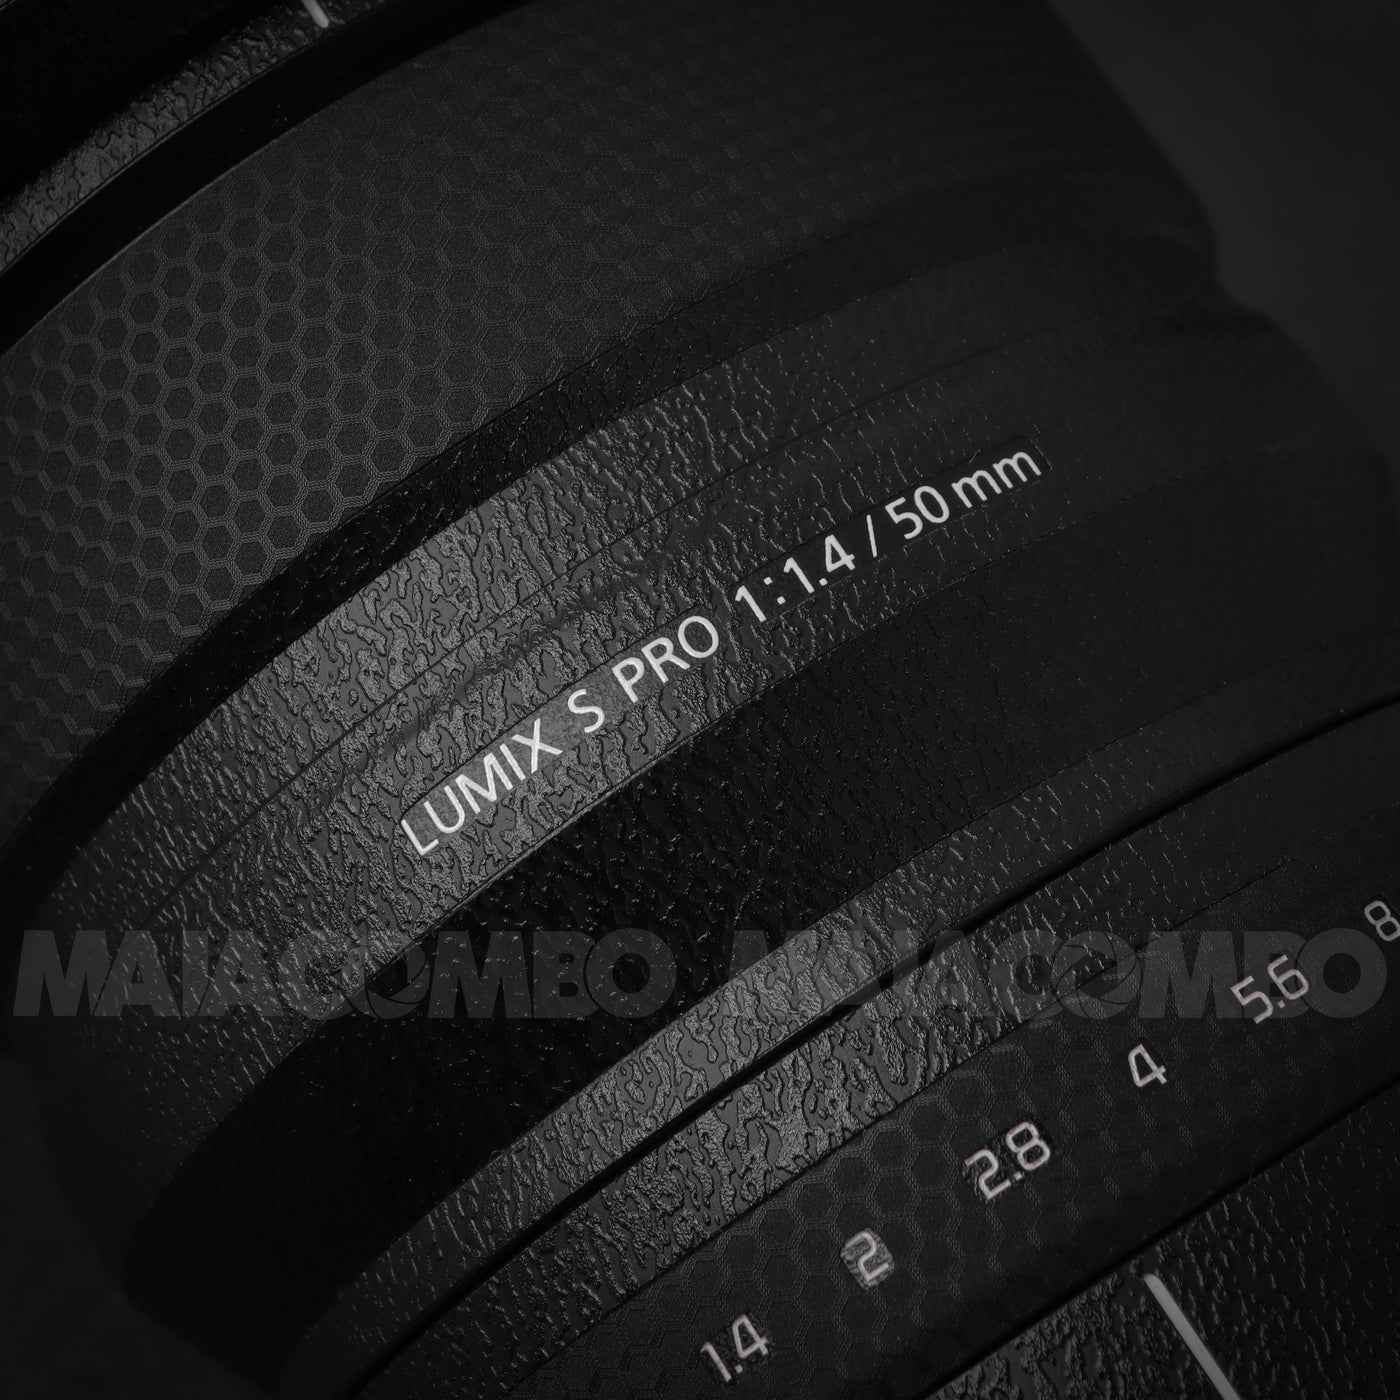 Panasonic Lumix S Pro 50mm F1.4 Lens Skin